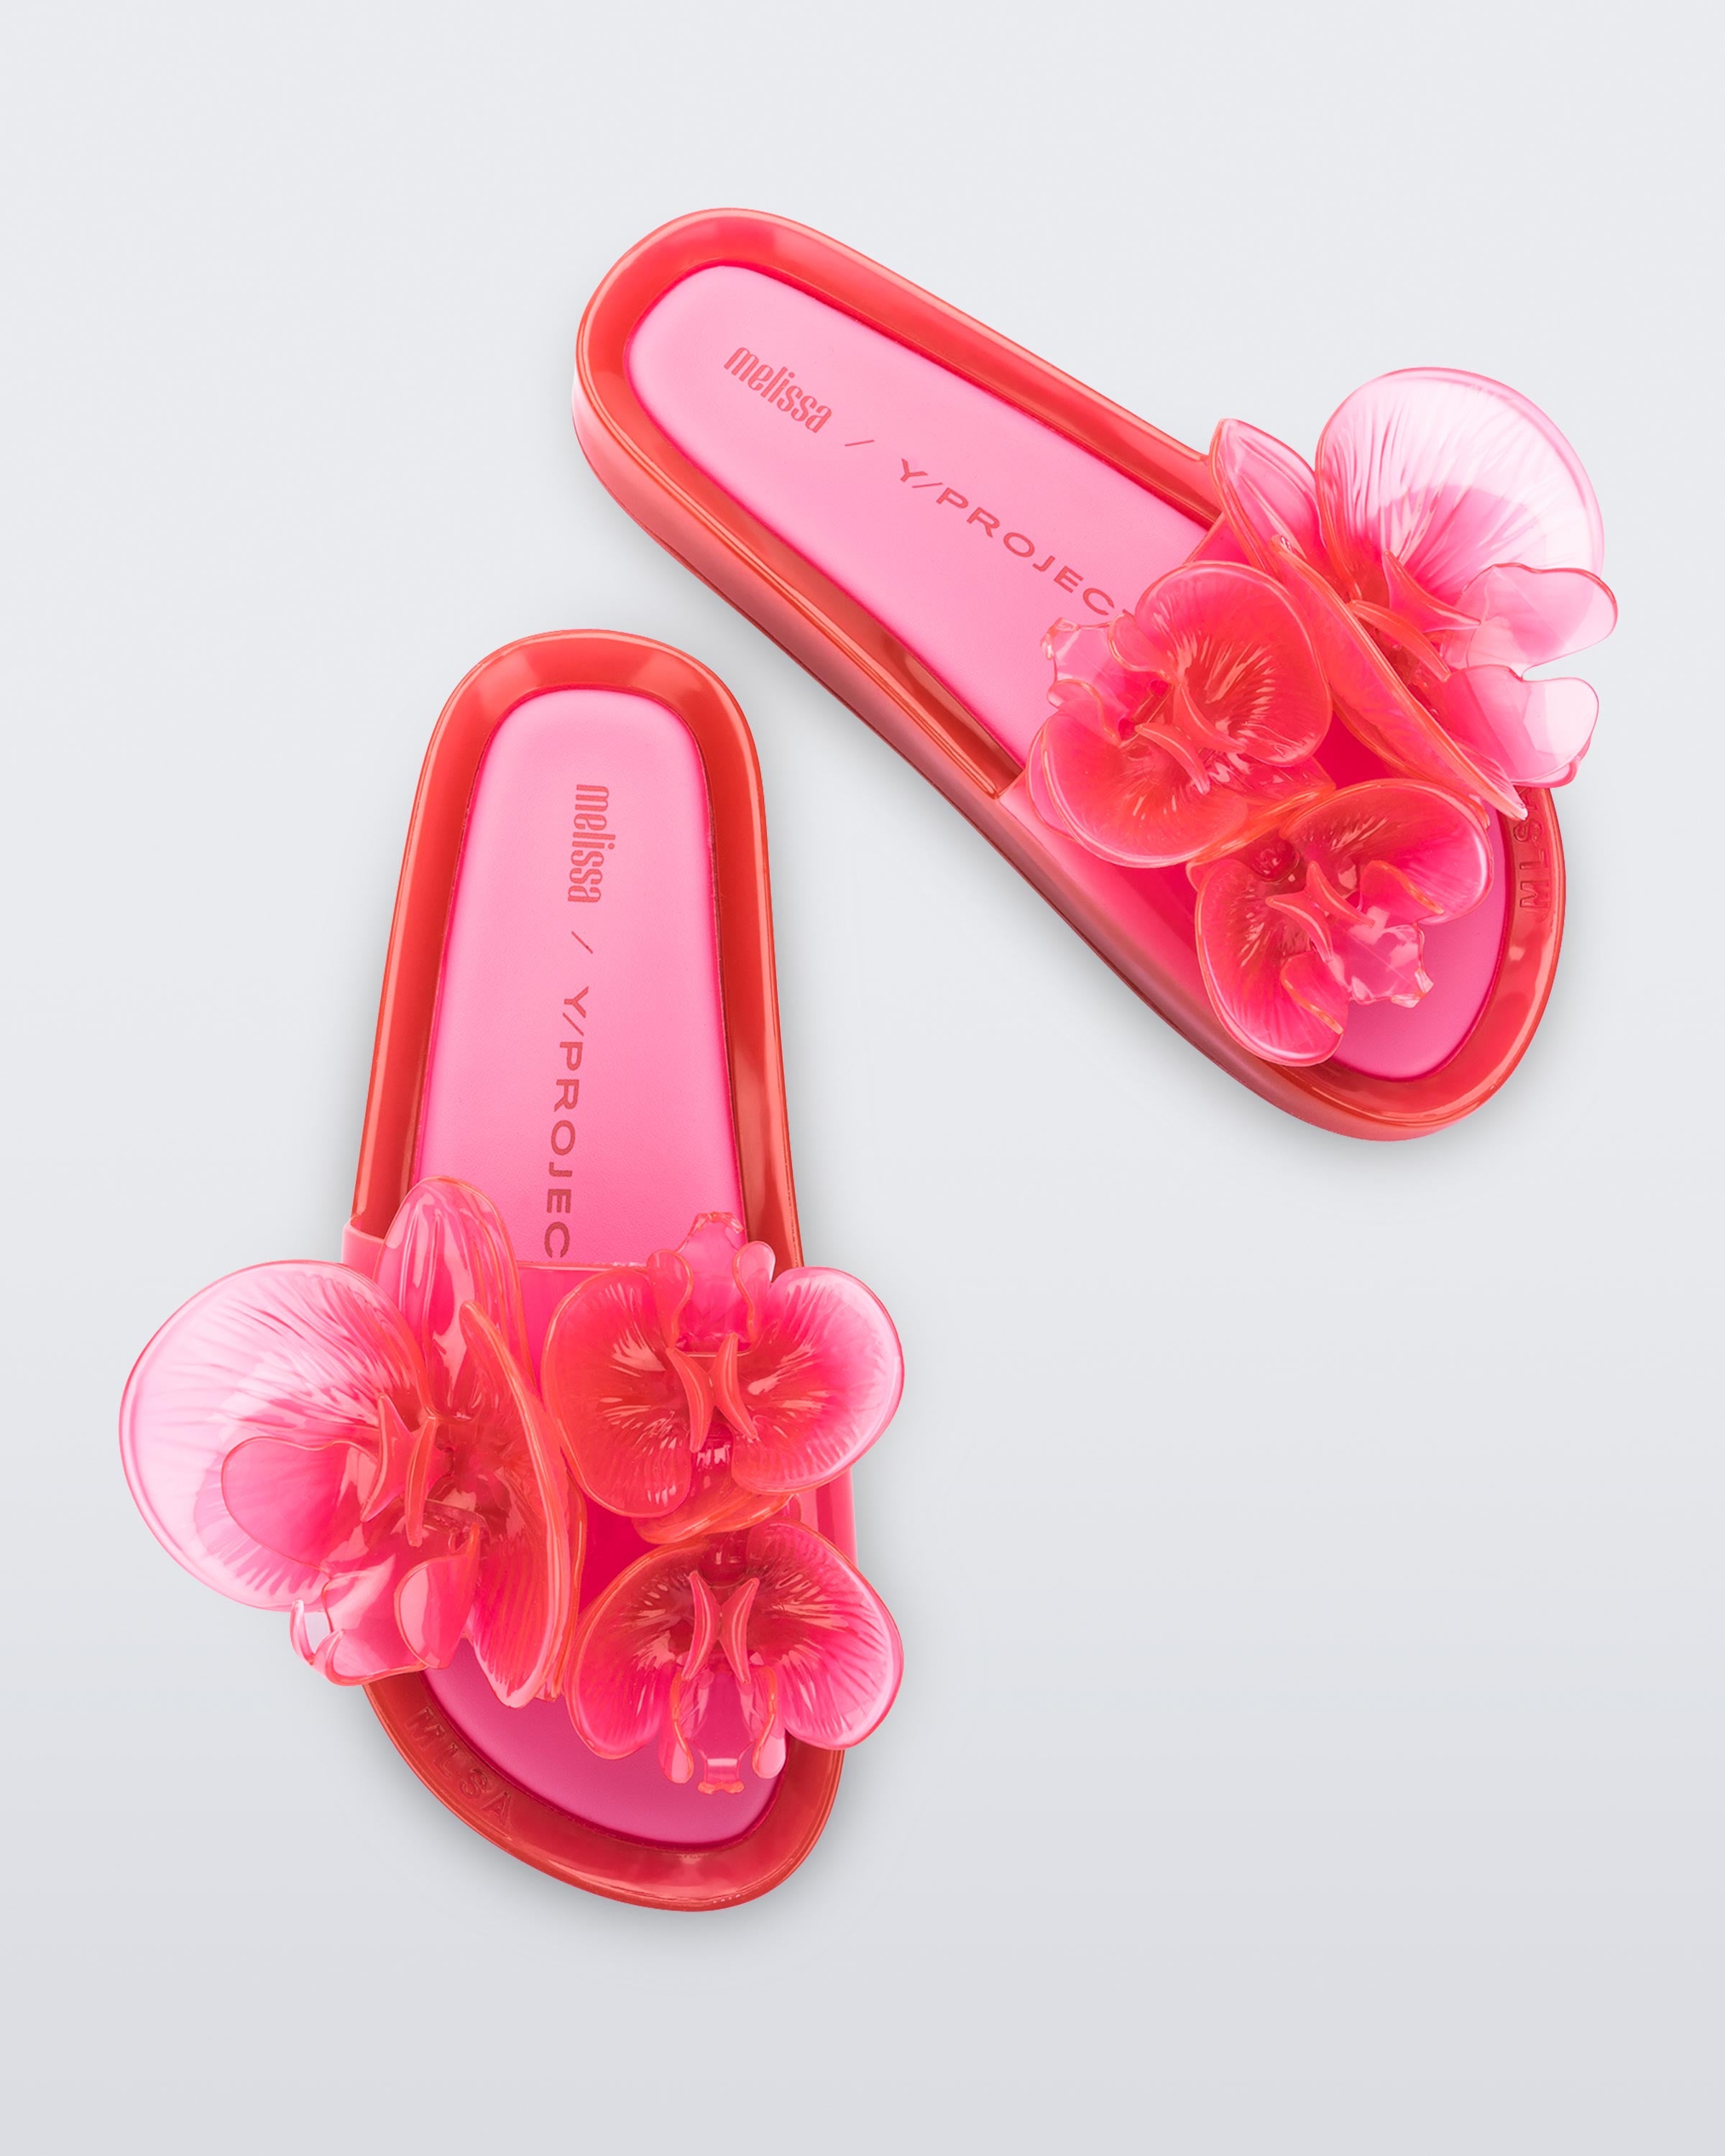 Melissa Beach Slide Flowers x Y Project - Pink